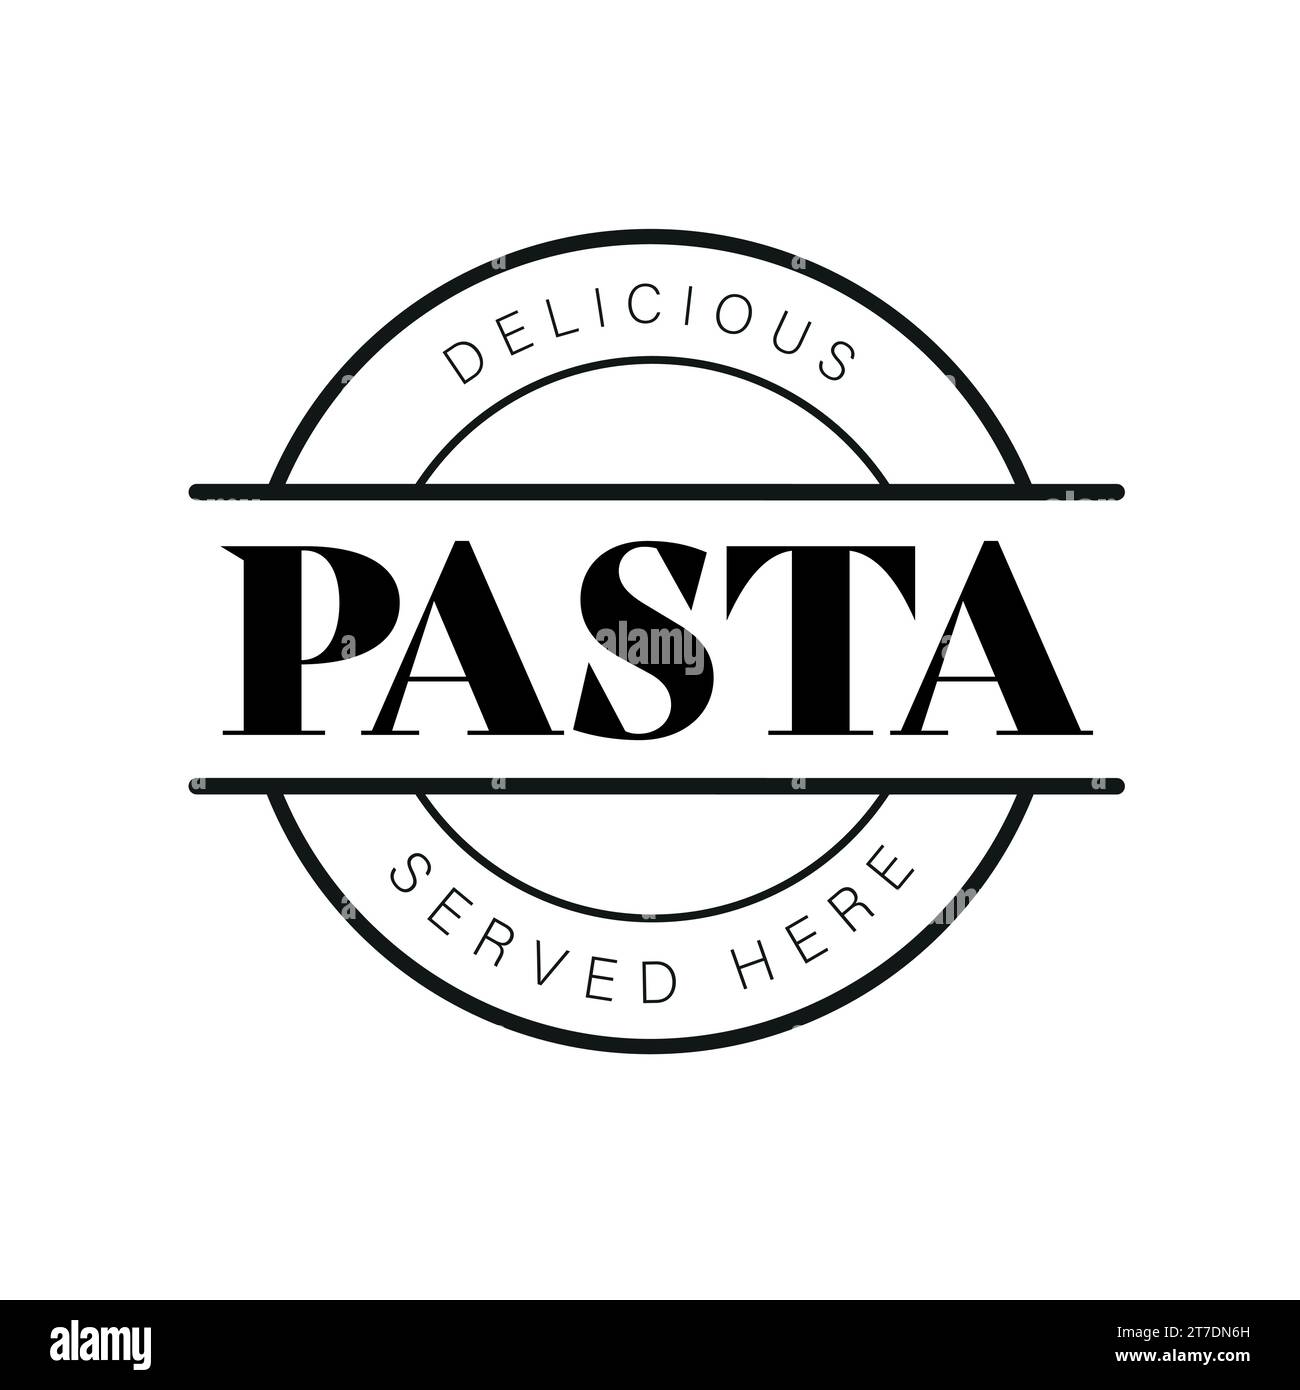 Delicious Pasta vintage stamp logo Stock Vector